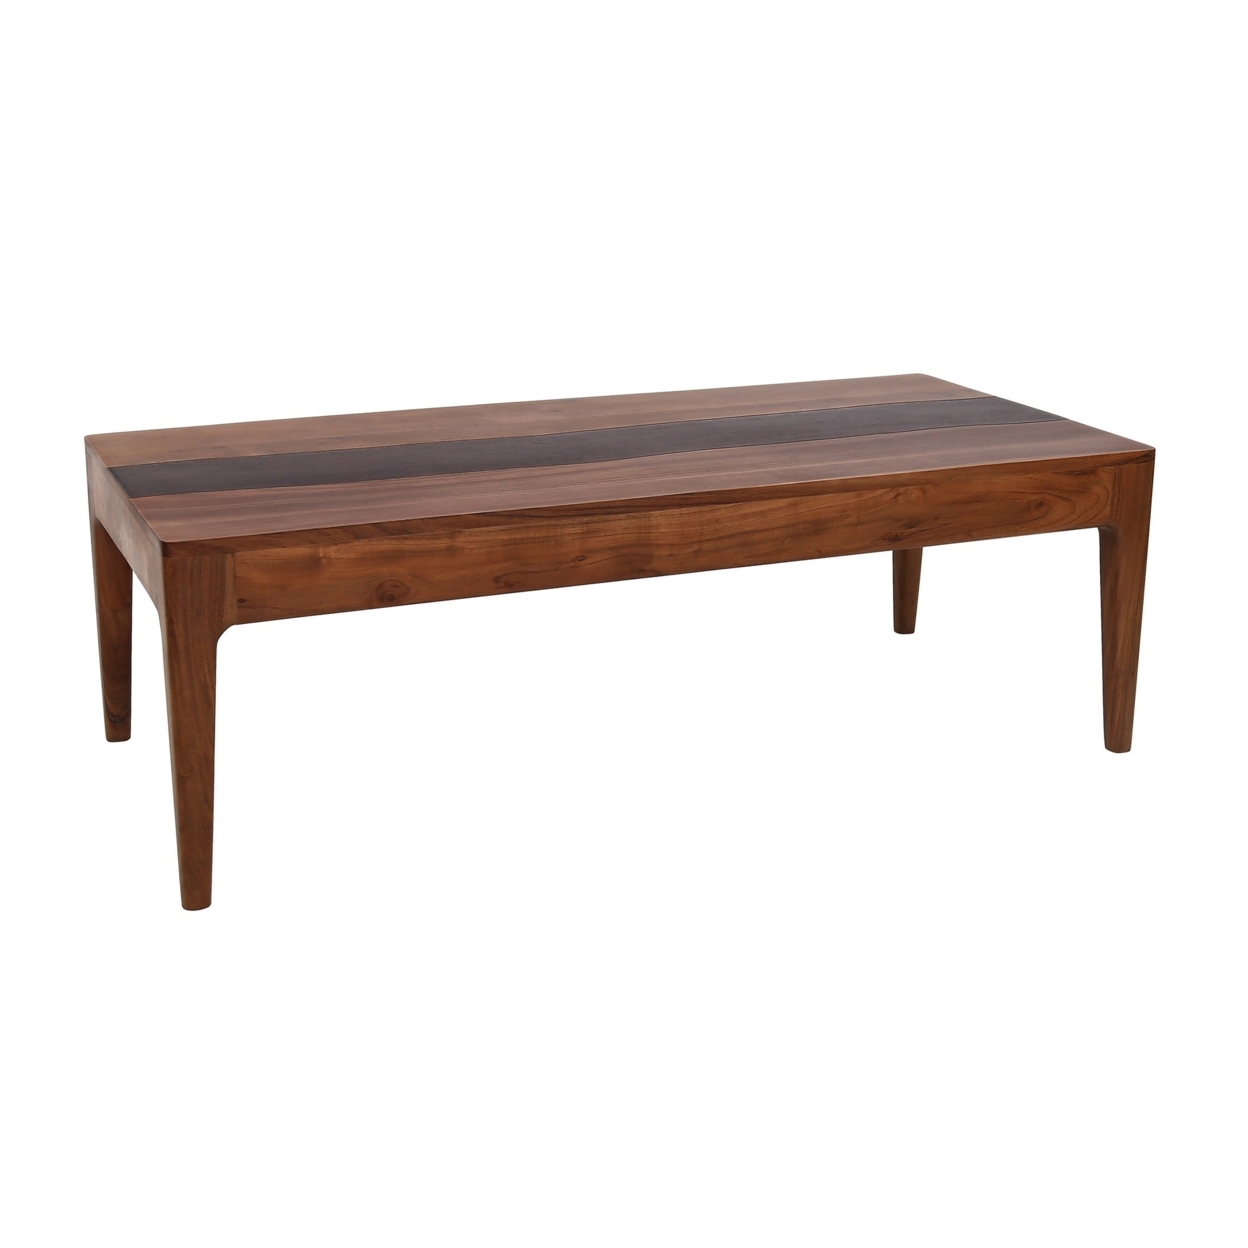 52 Inch Modern Coffee Table, Acacia Wood With Classic Block Legs, Brown- Saltoro Sherpi